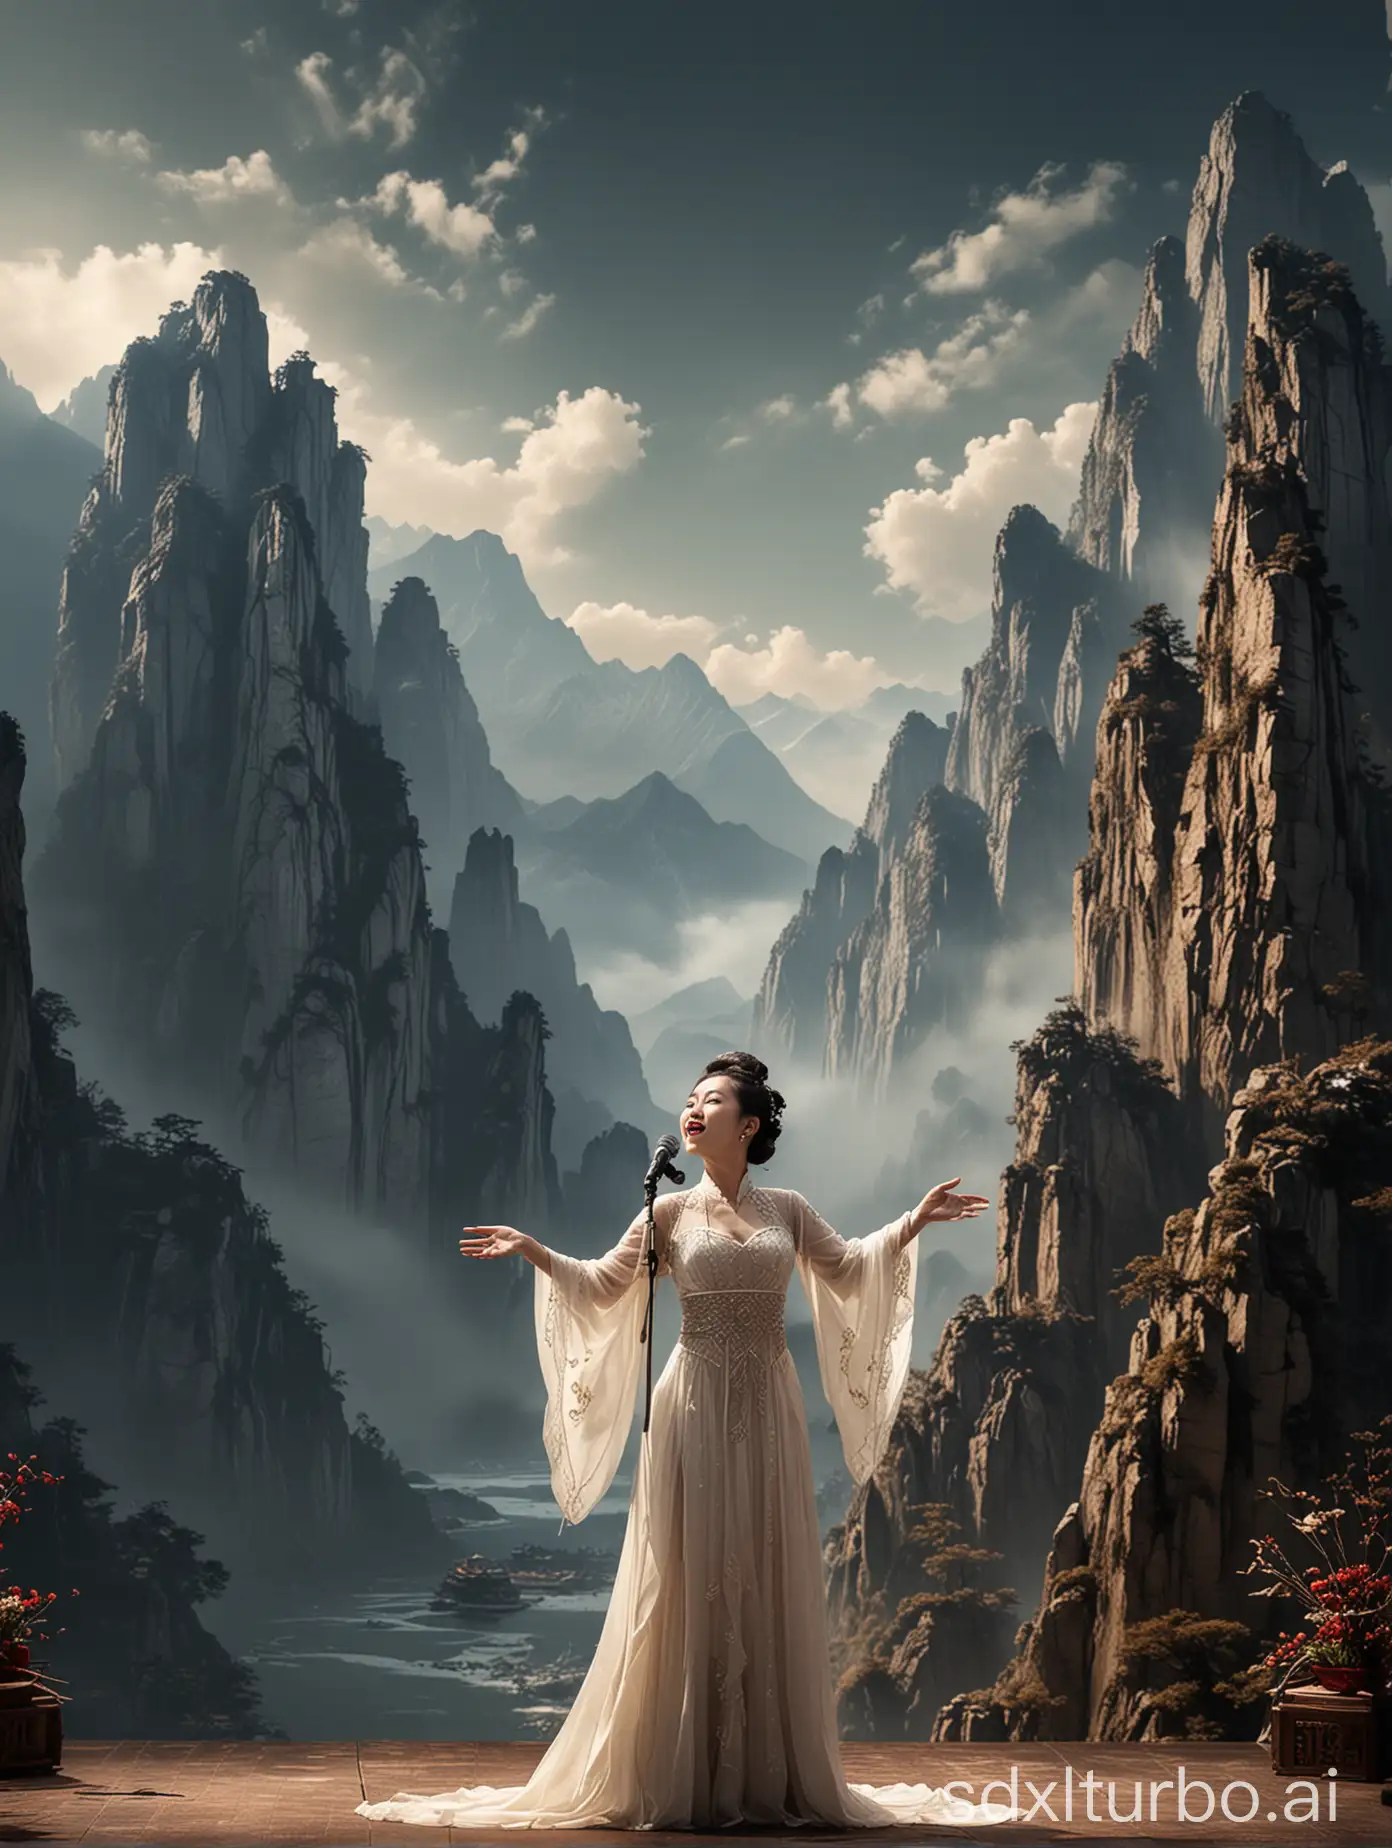 Leoarmo一个精致的中国女人，孤独的，在舞台上卖力的唱歌，背后是两座巍峨的大山，形成强烈的对比，仿佛背负着巨大的压力！r